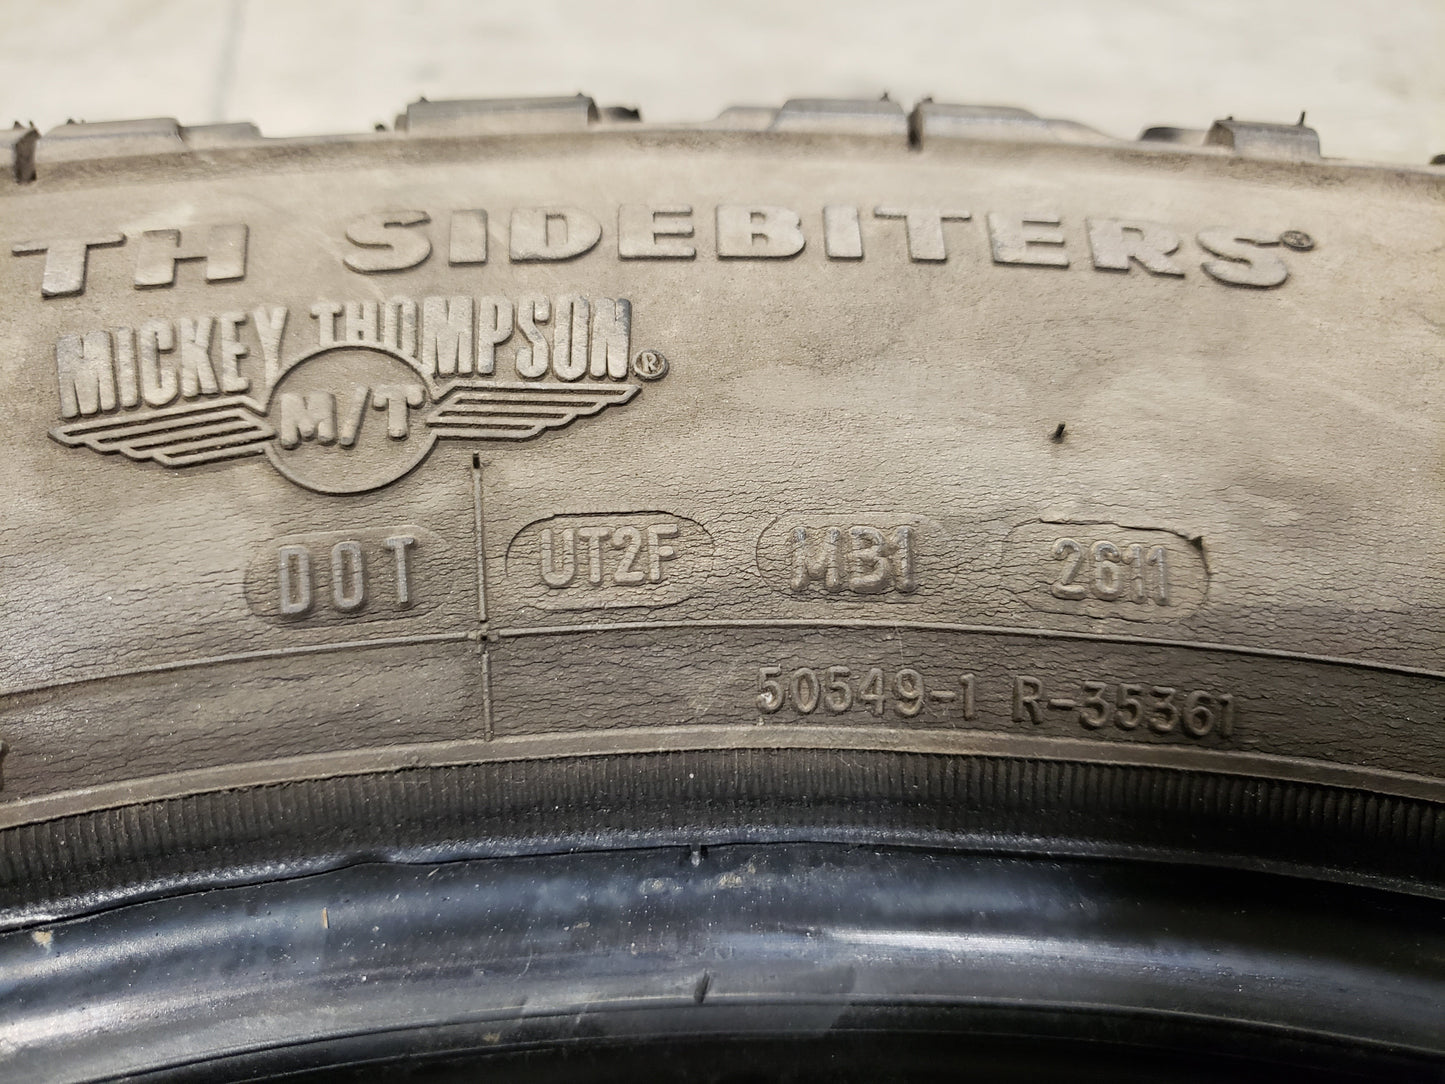 SET OF 2 305/55R20 Mickey Thompson Baja ATZ M/T W/sidebiters 121/118 S E - Used Tires